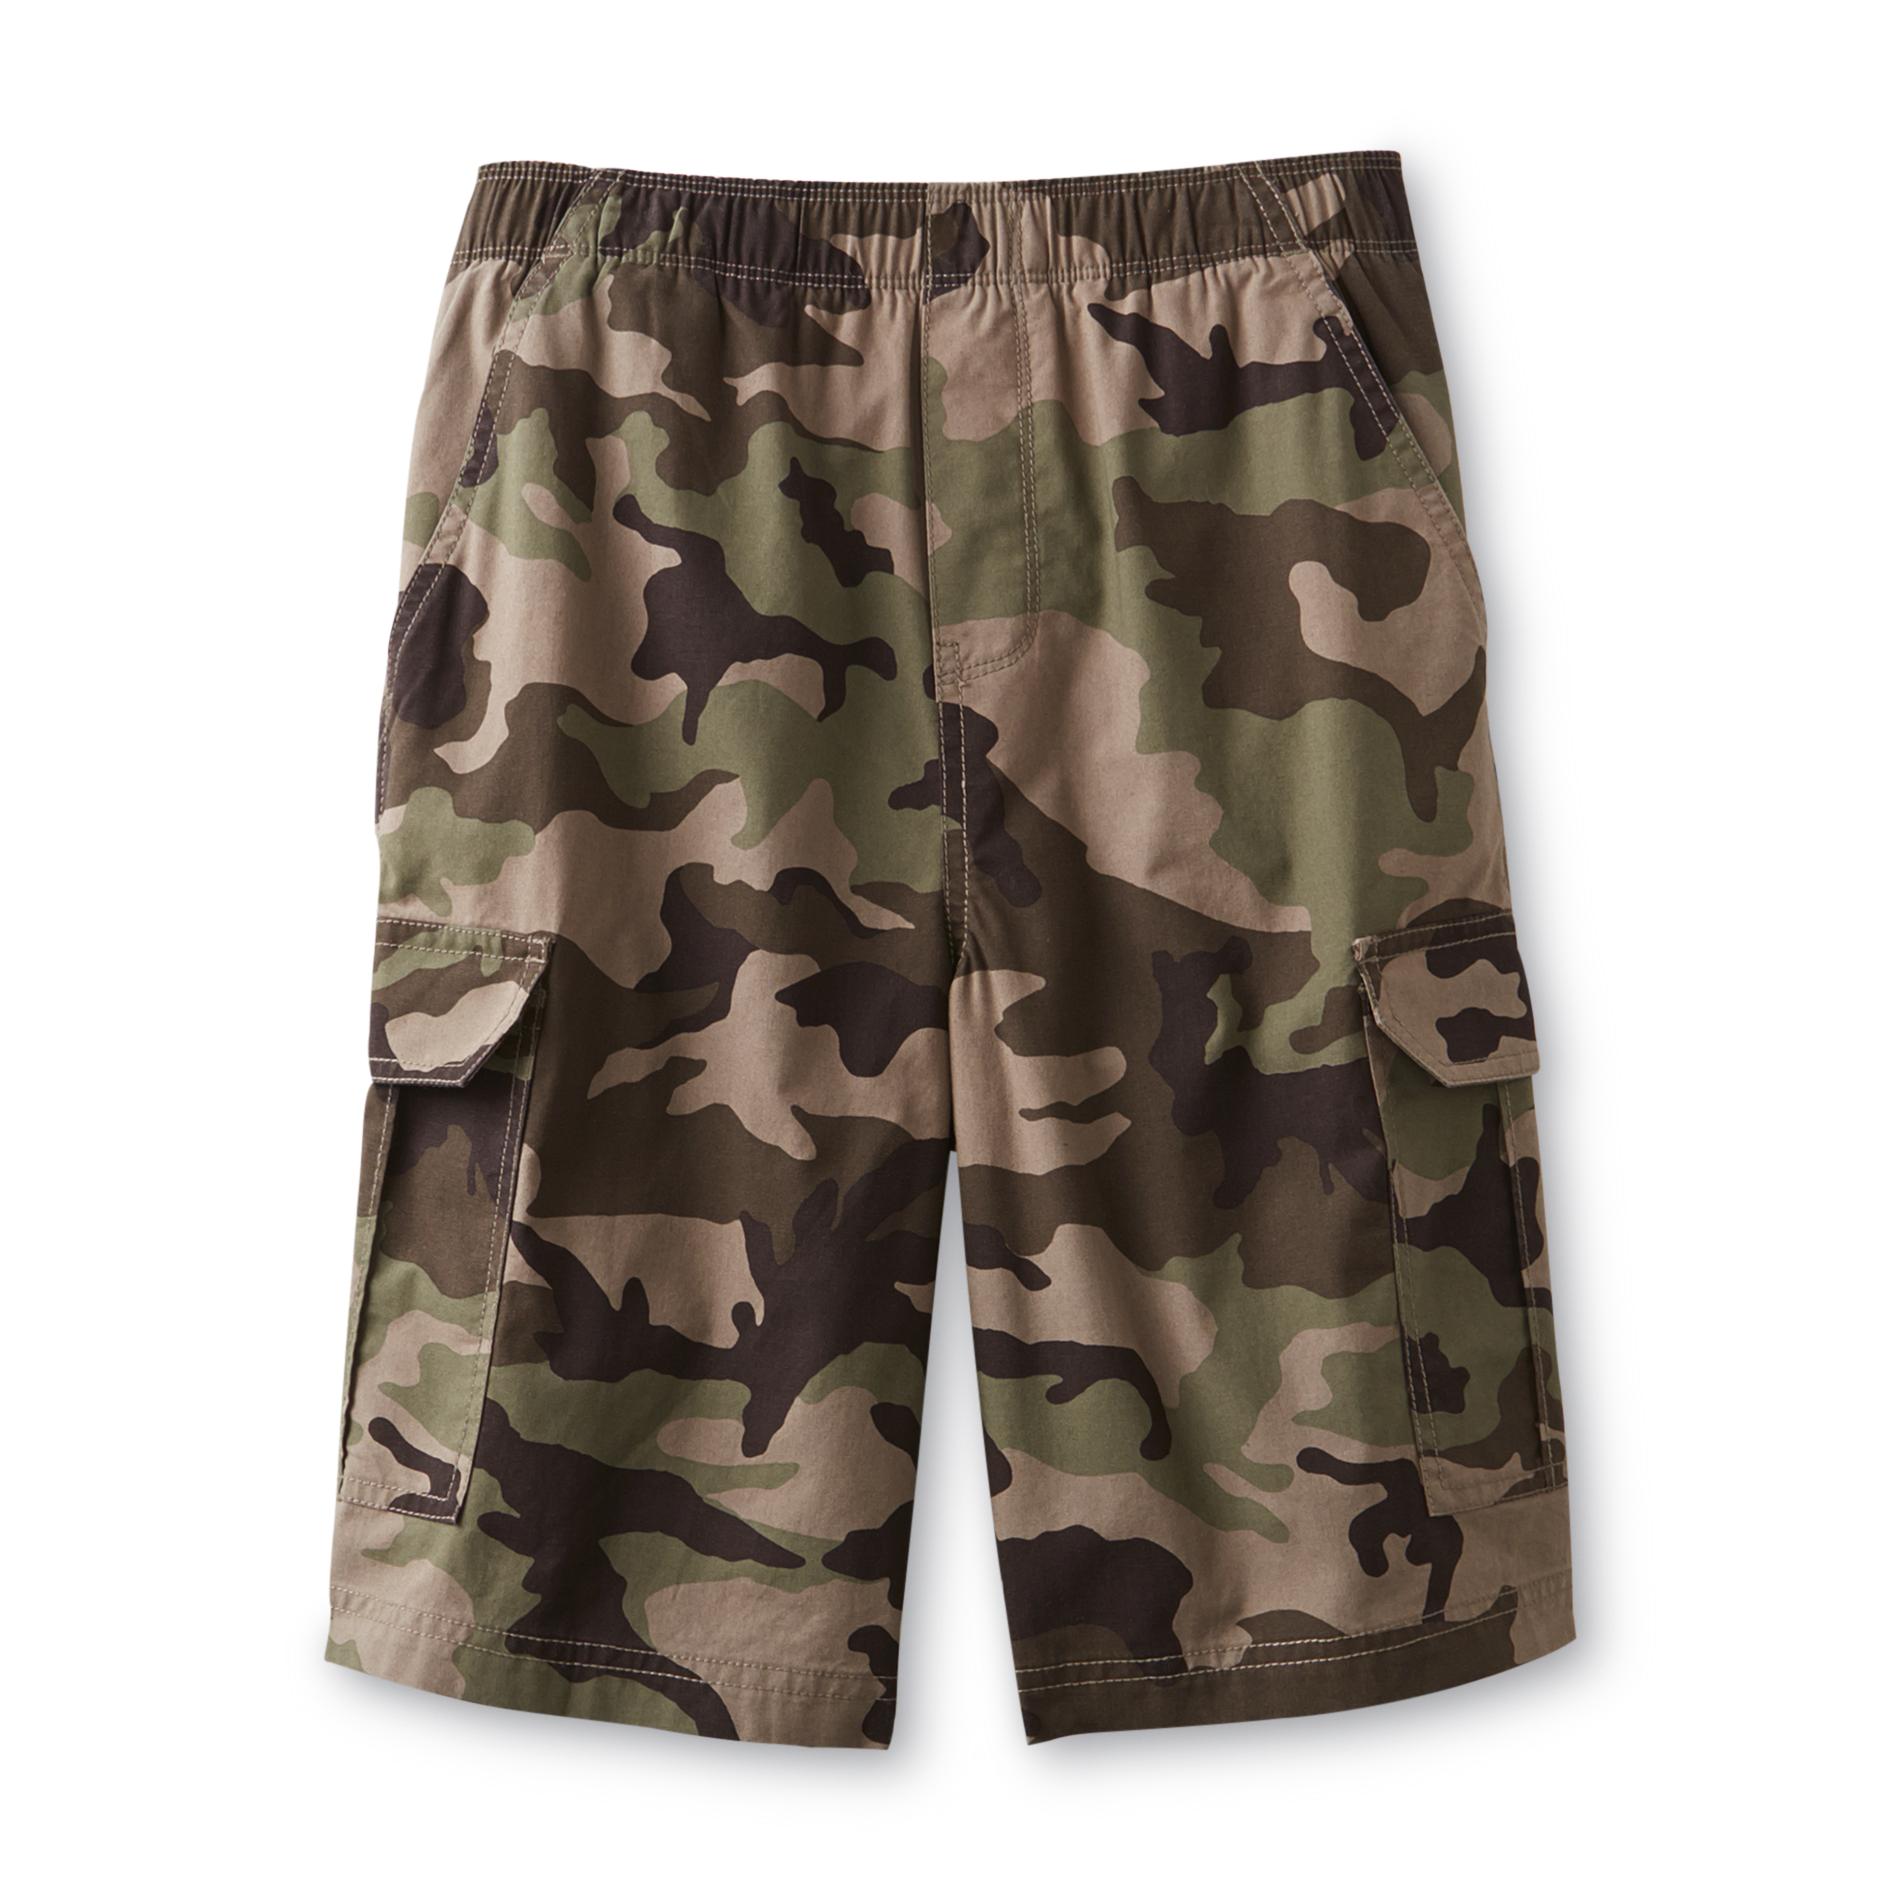 Canyon River Blues Boy's Cargo Shorts - Camouflage